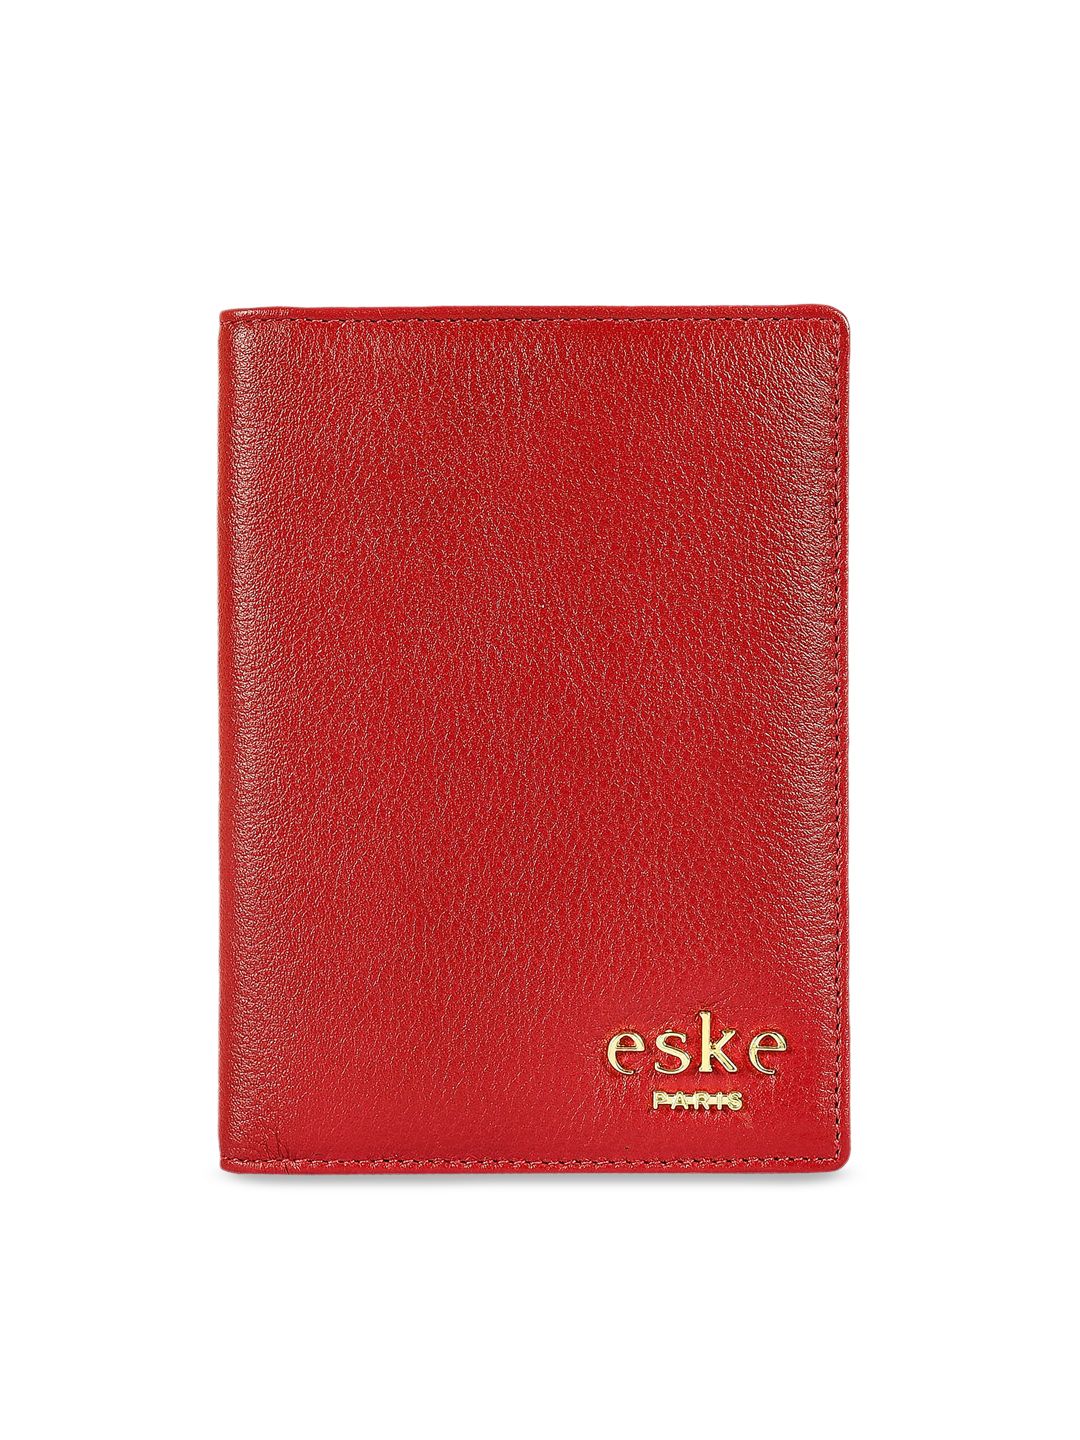 Eske Unisex Red Textured Leather Addler Passport Holder Price in India